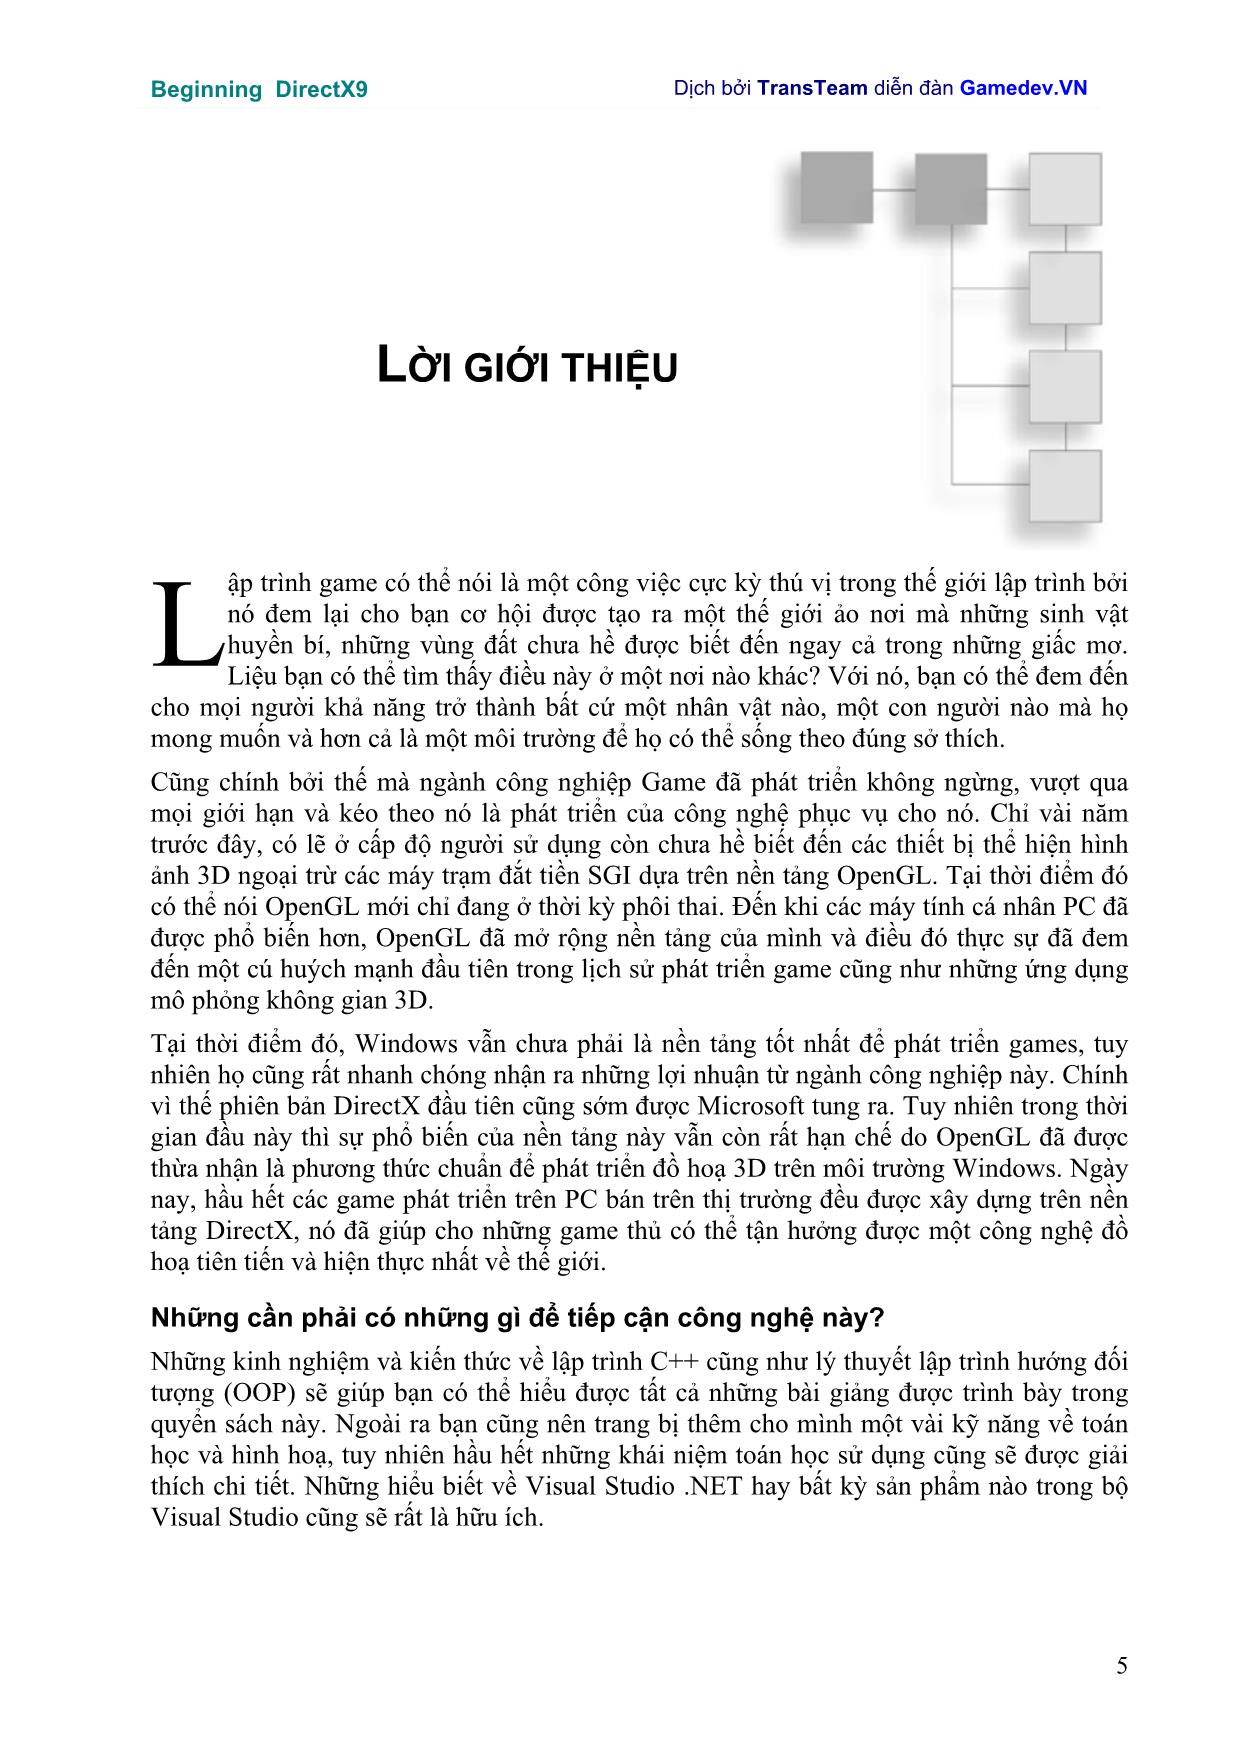 Beginning DirectX9 trang 5